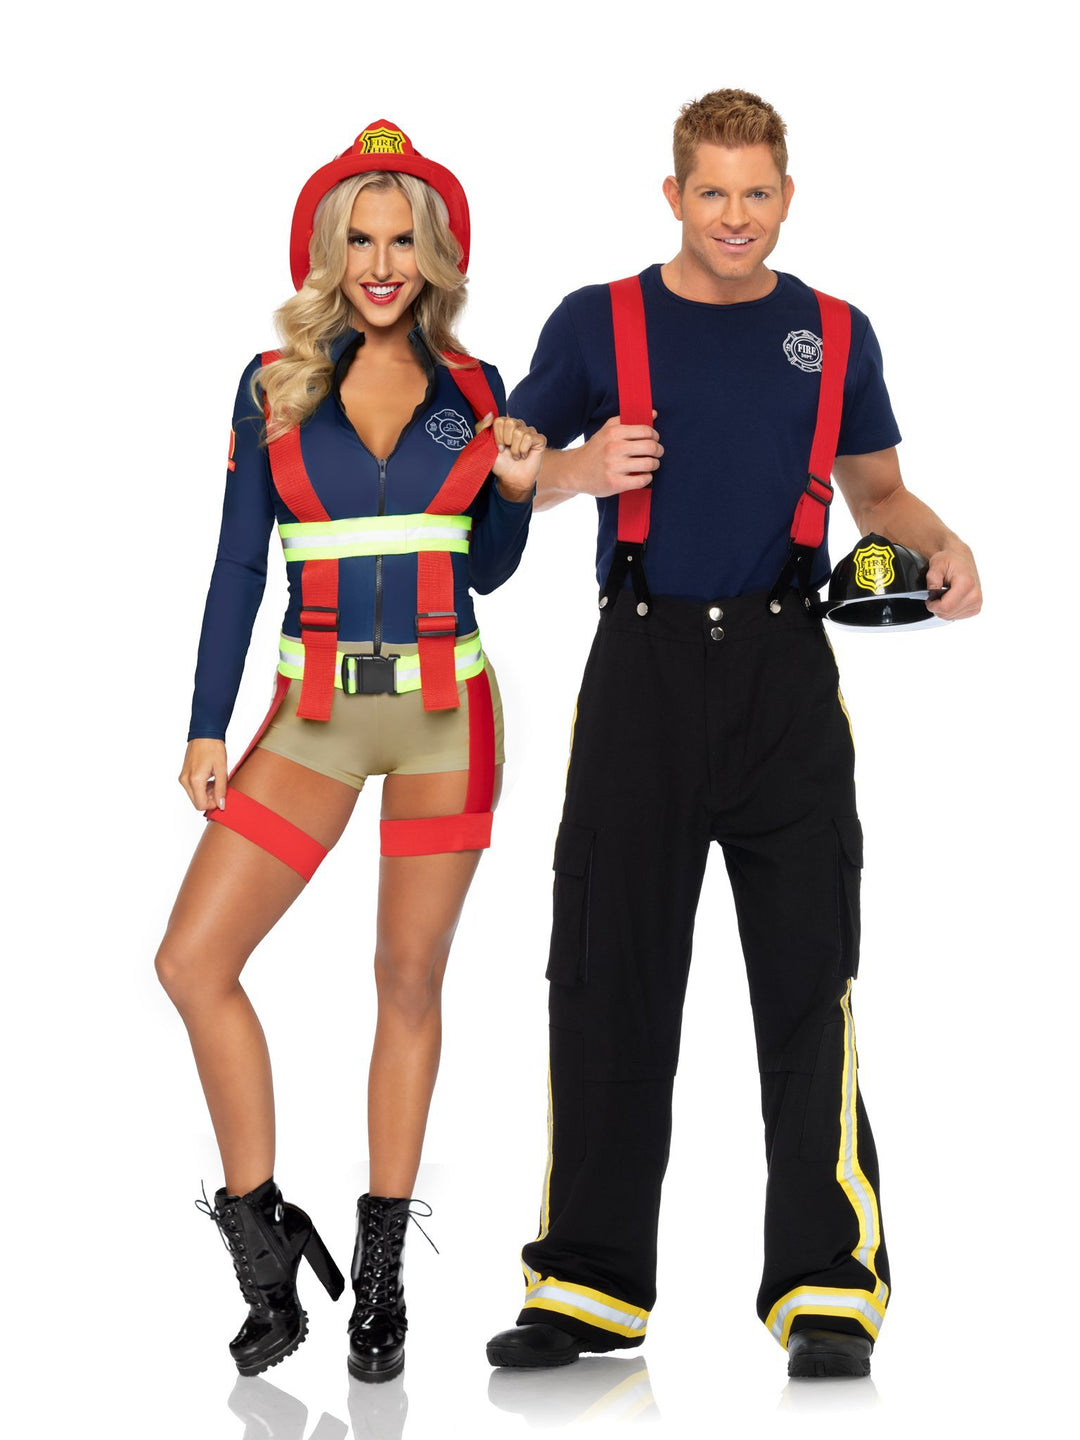 Hot Zone Firefighter Honey Romper with Reflective Garter Suspenders